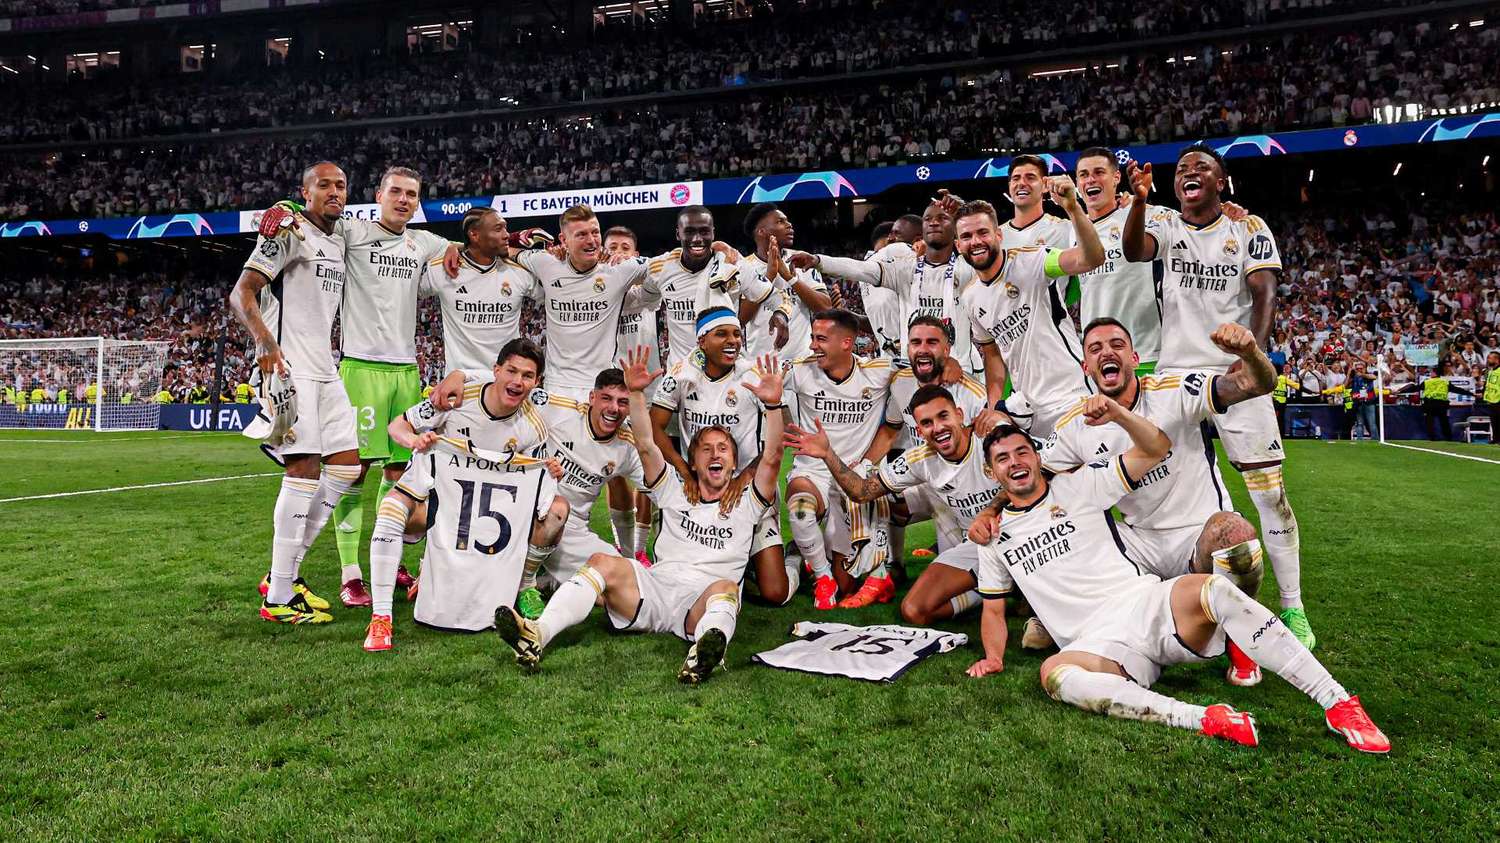 El Real Madrid eliminó al Bayern Múnich y clasificó a la final de la Champions League